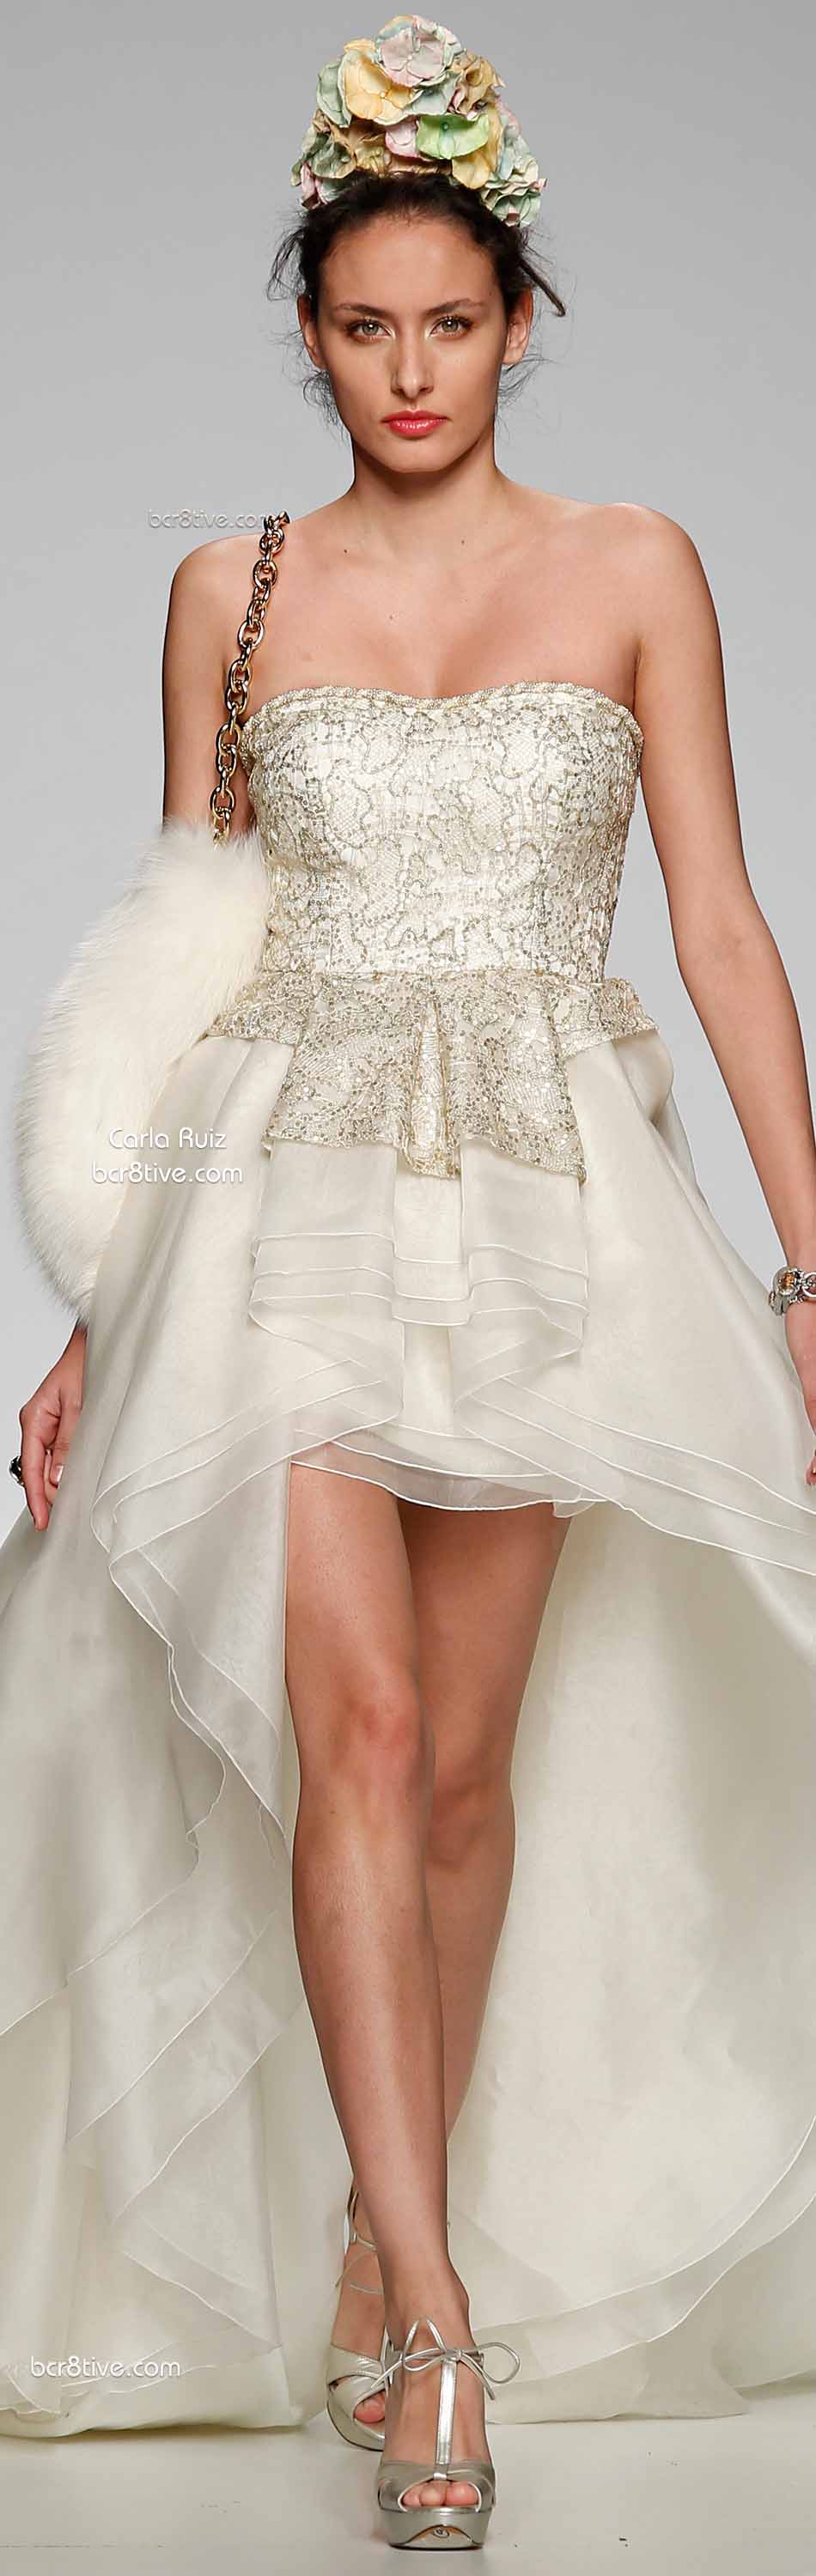 Carla Ruiz Spring 2014 Bridal Couture